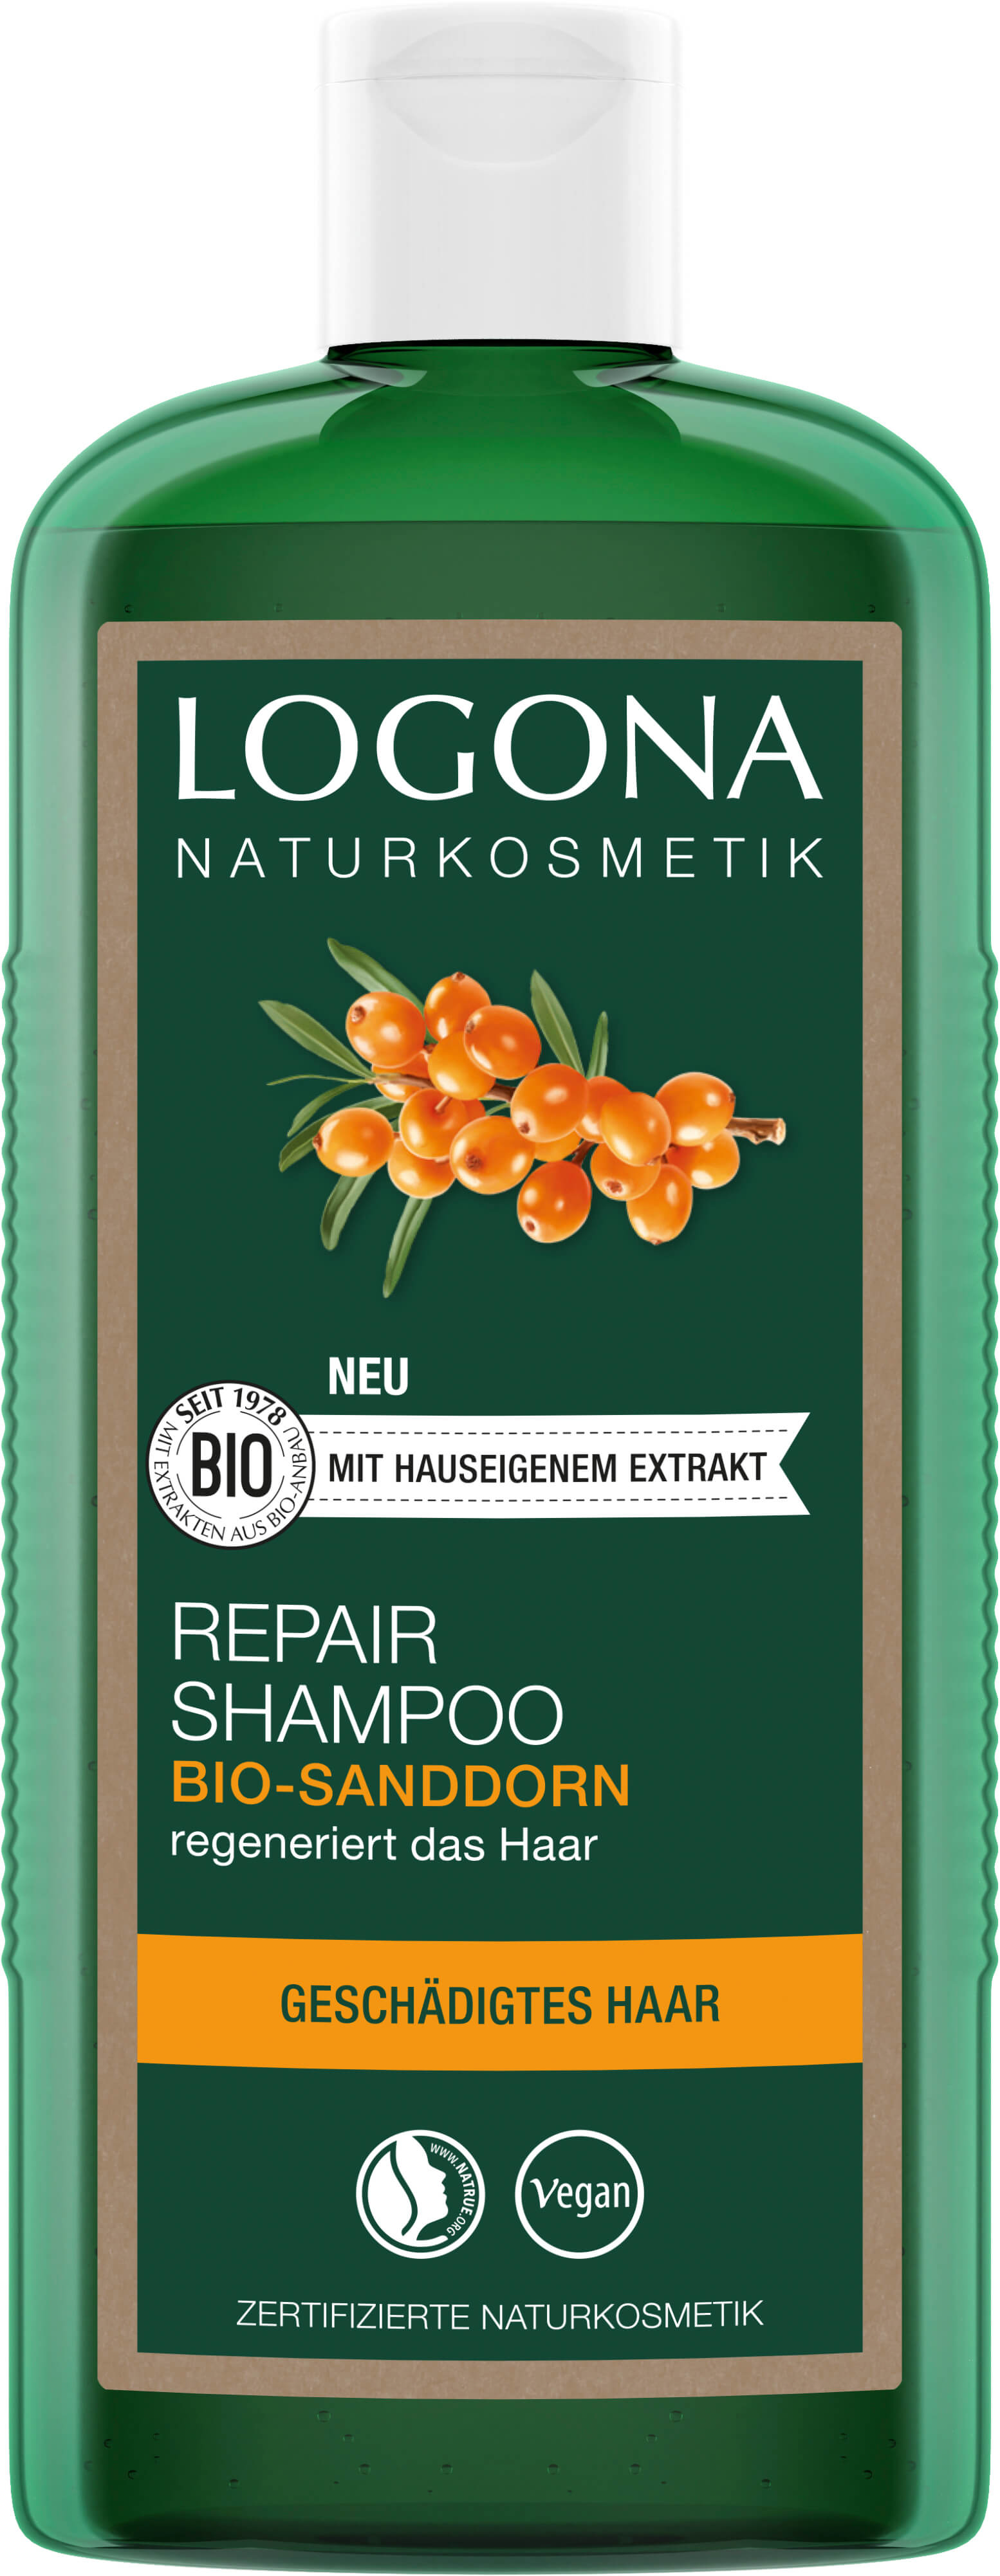 LOGONA Naturkosmetik Pflege | Shampoo Repair & Bio-Sanddorn